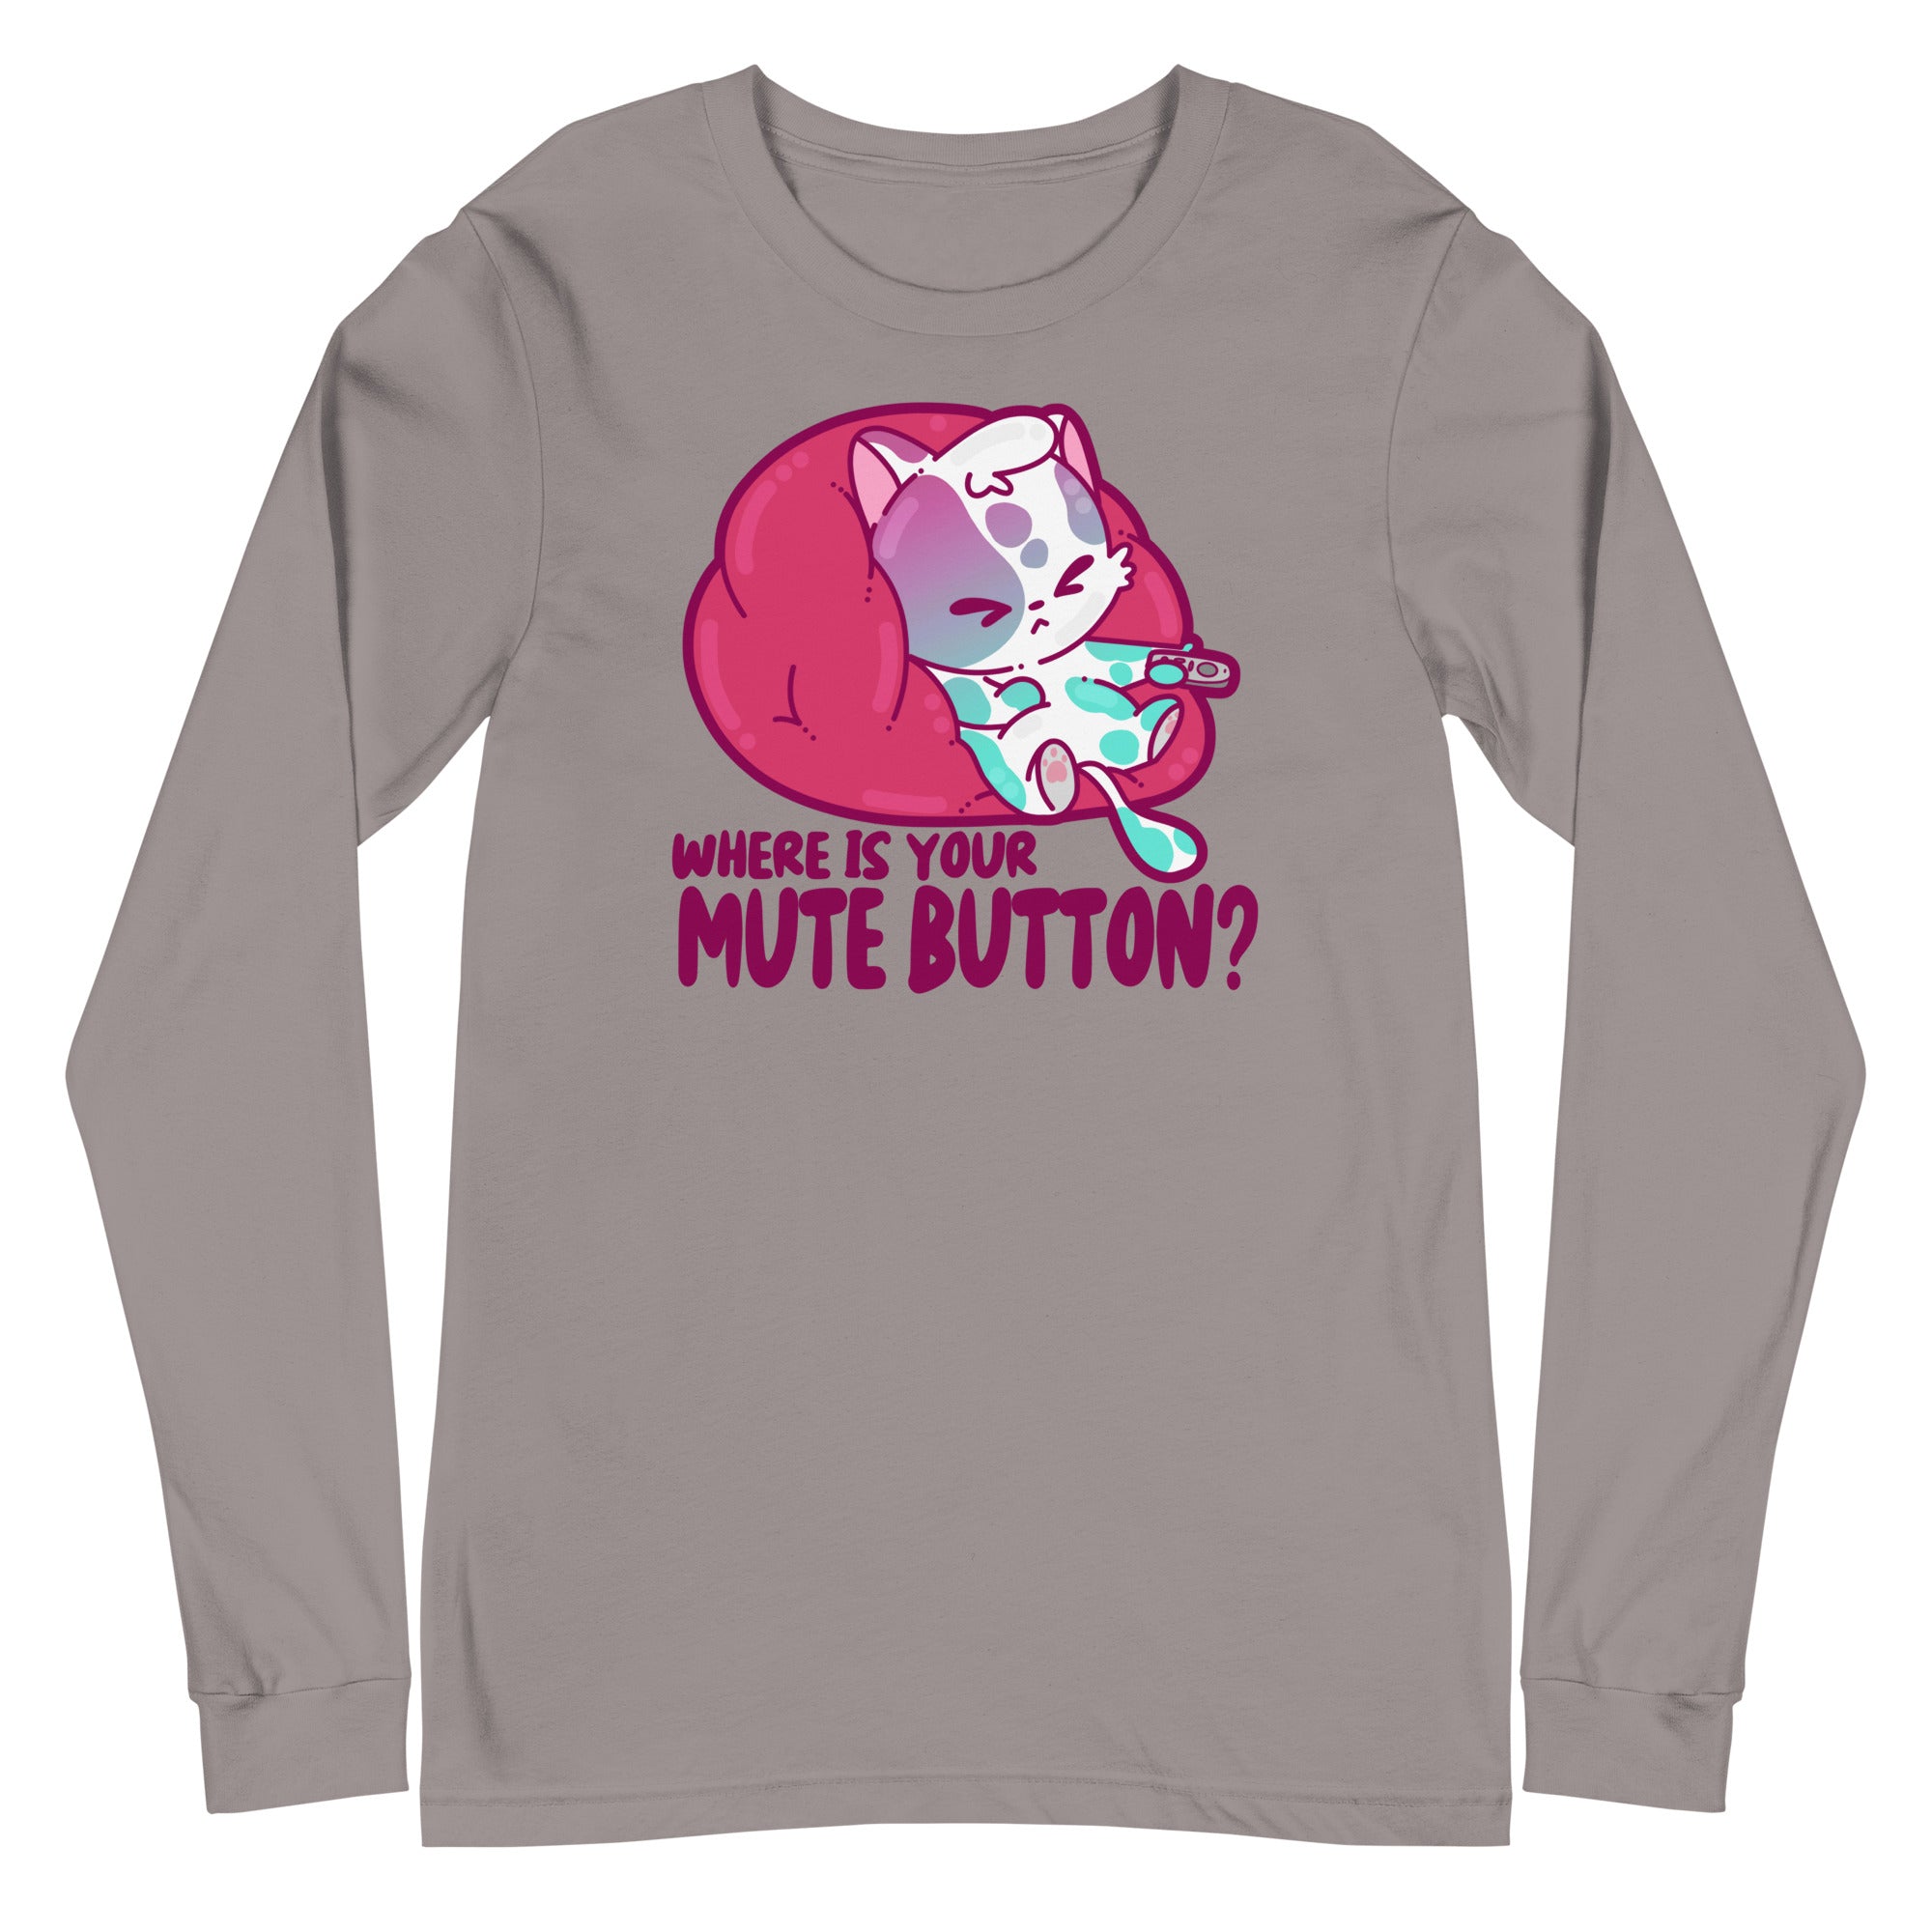 MUTE BUTTON - Long Sleeve Tee